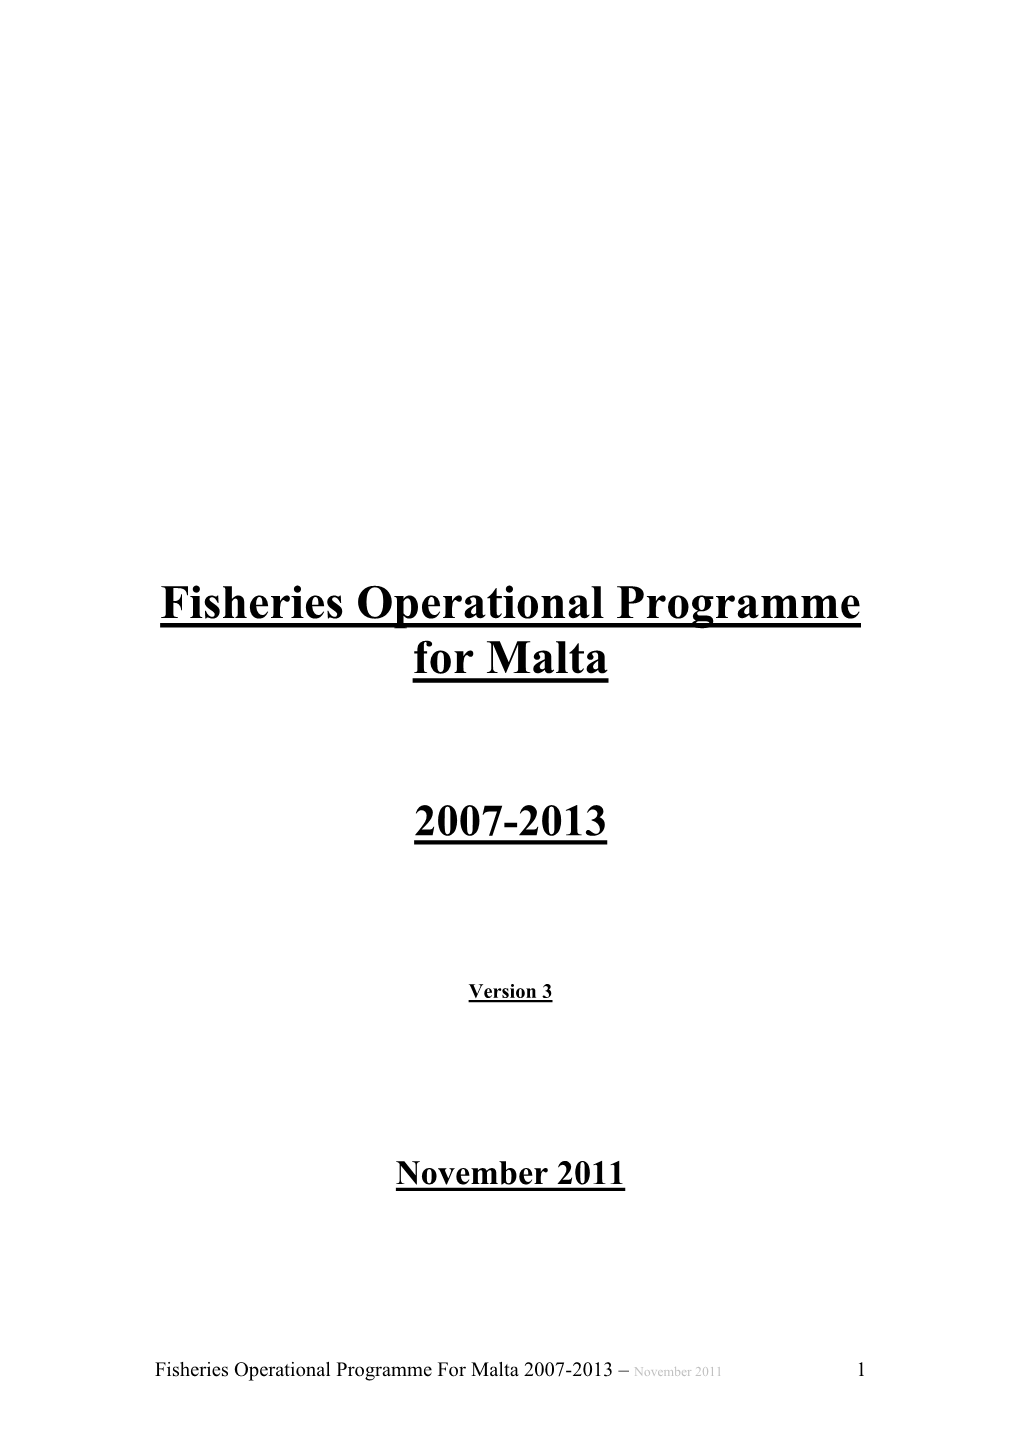 Malta Fisheries Operational Programme (2007-2013)